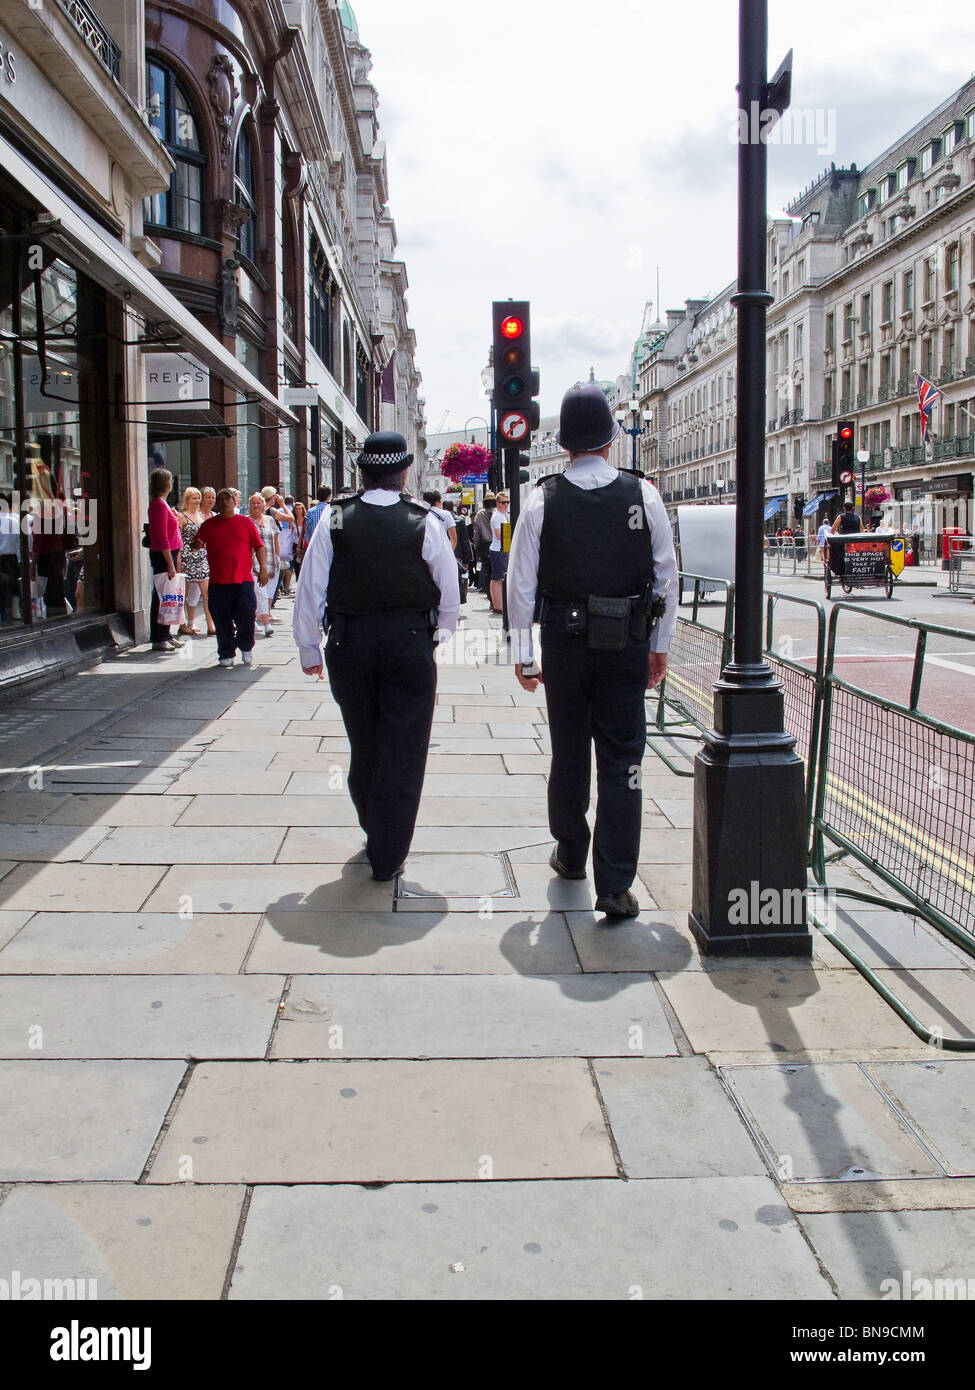 Two Metropolitan police officers walking on a street in London. Stock Photo